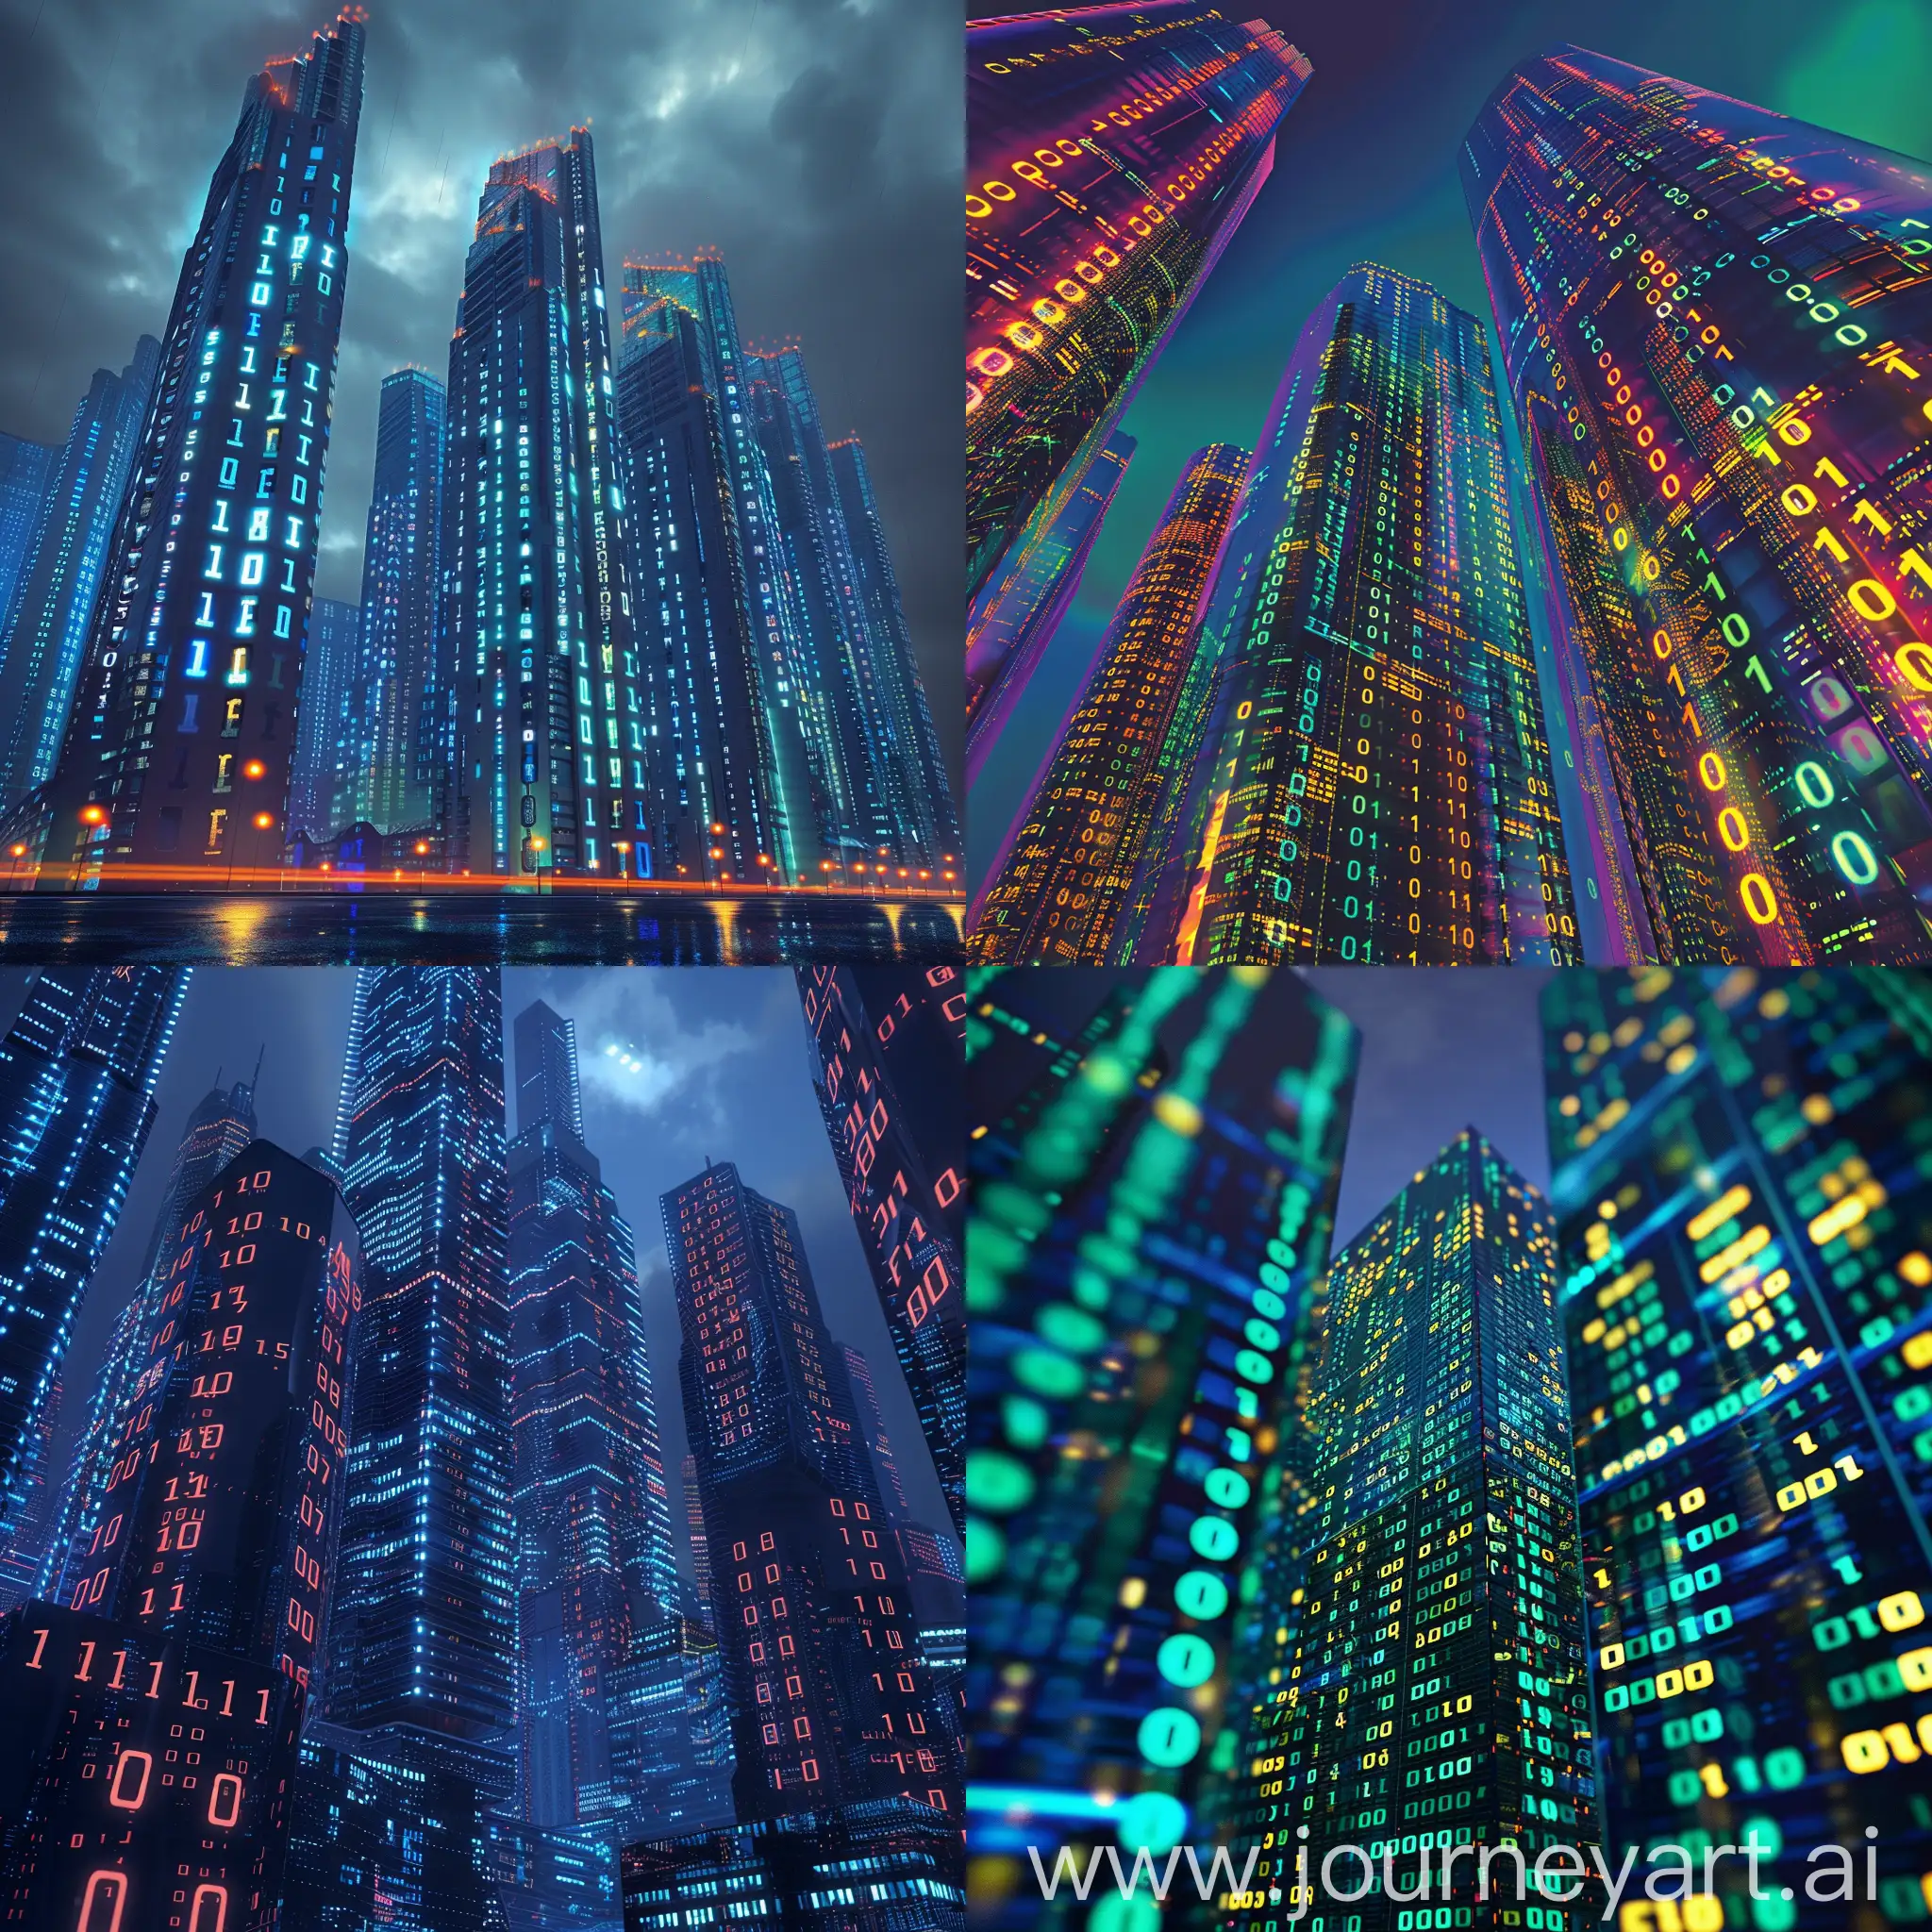 Futuristic-Cyberpunk-Cityscape-with-Binary-Code-Buildings